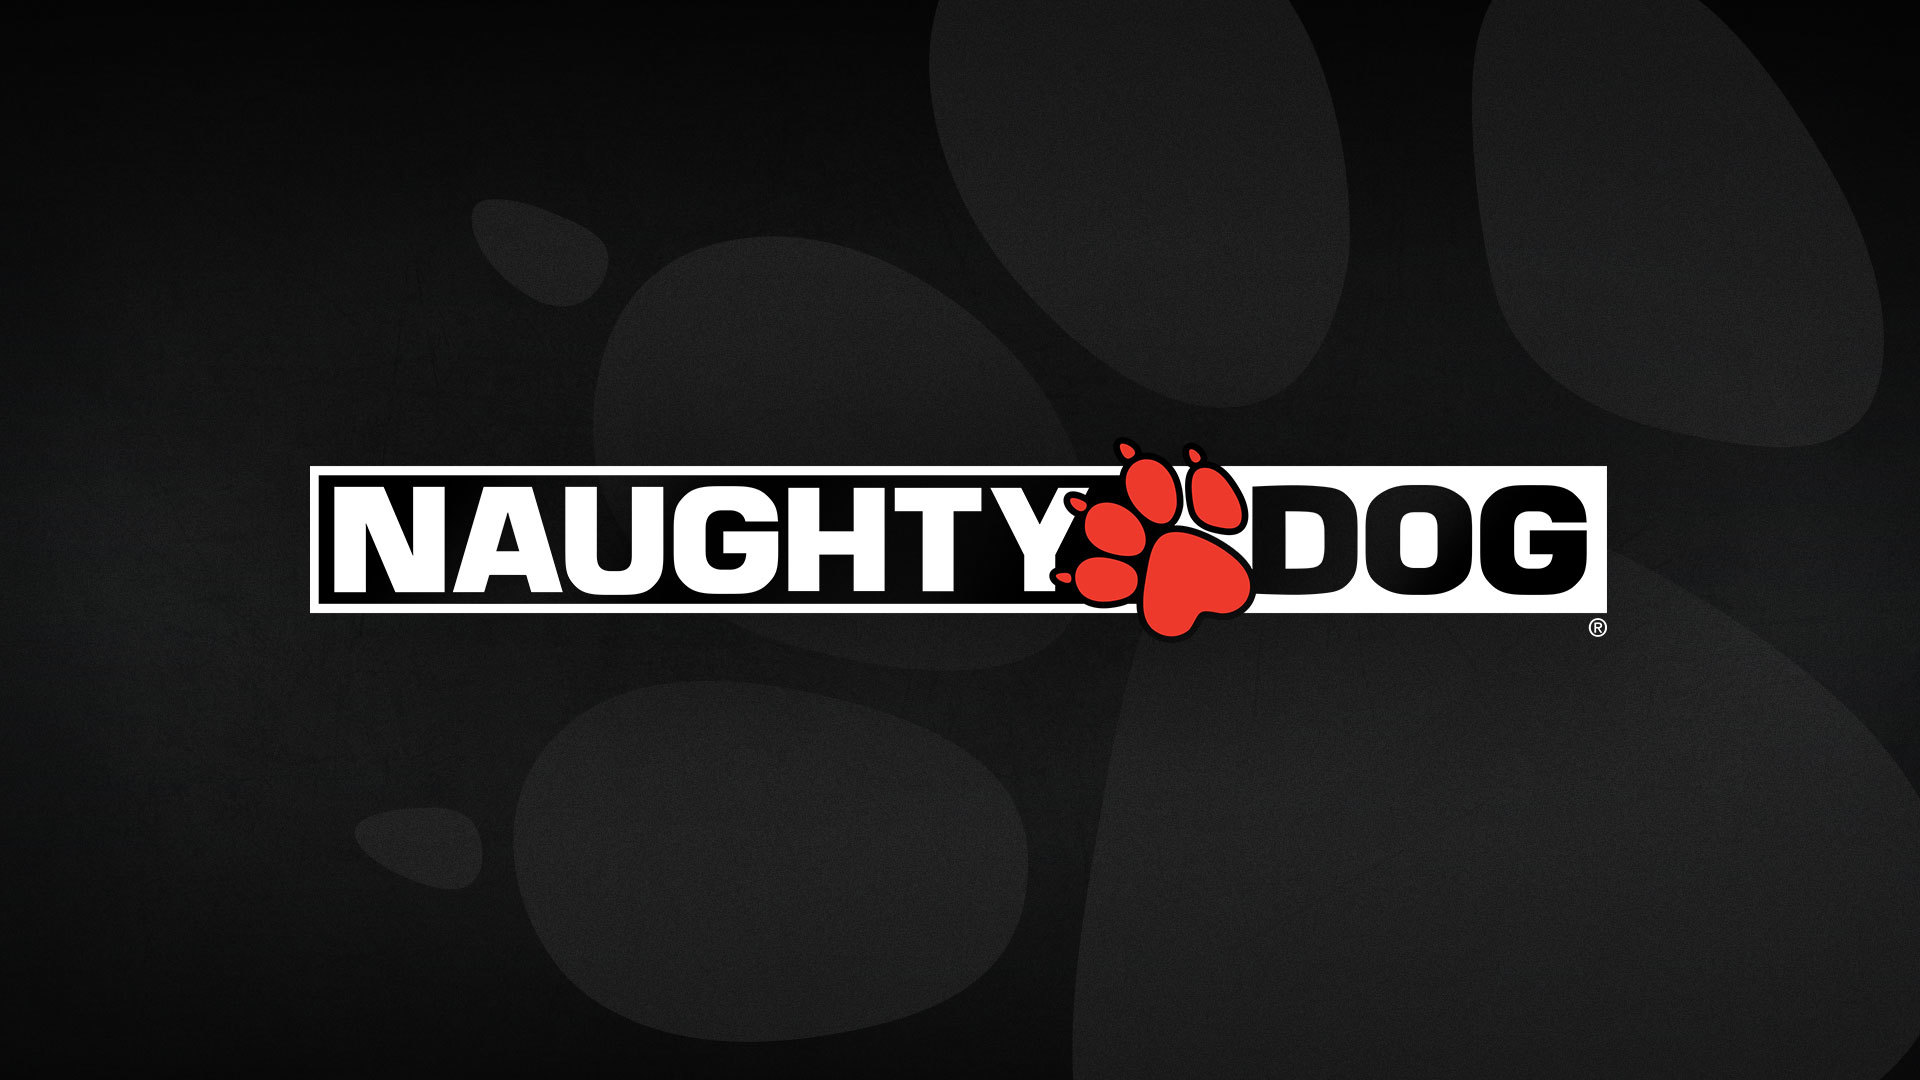 wp-content/uploads/2018/03/Naughty-Dog-logo.jpg